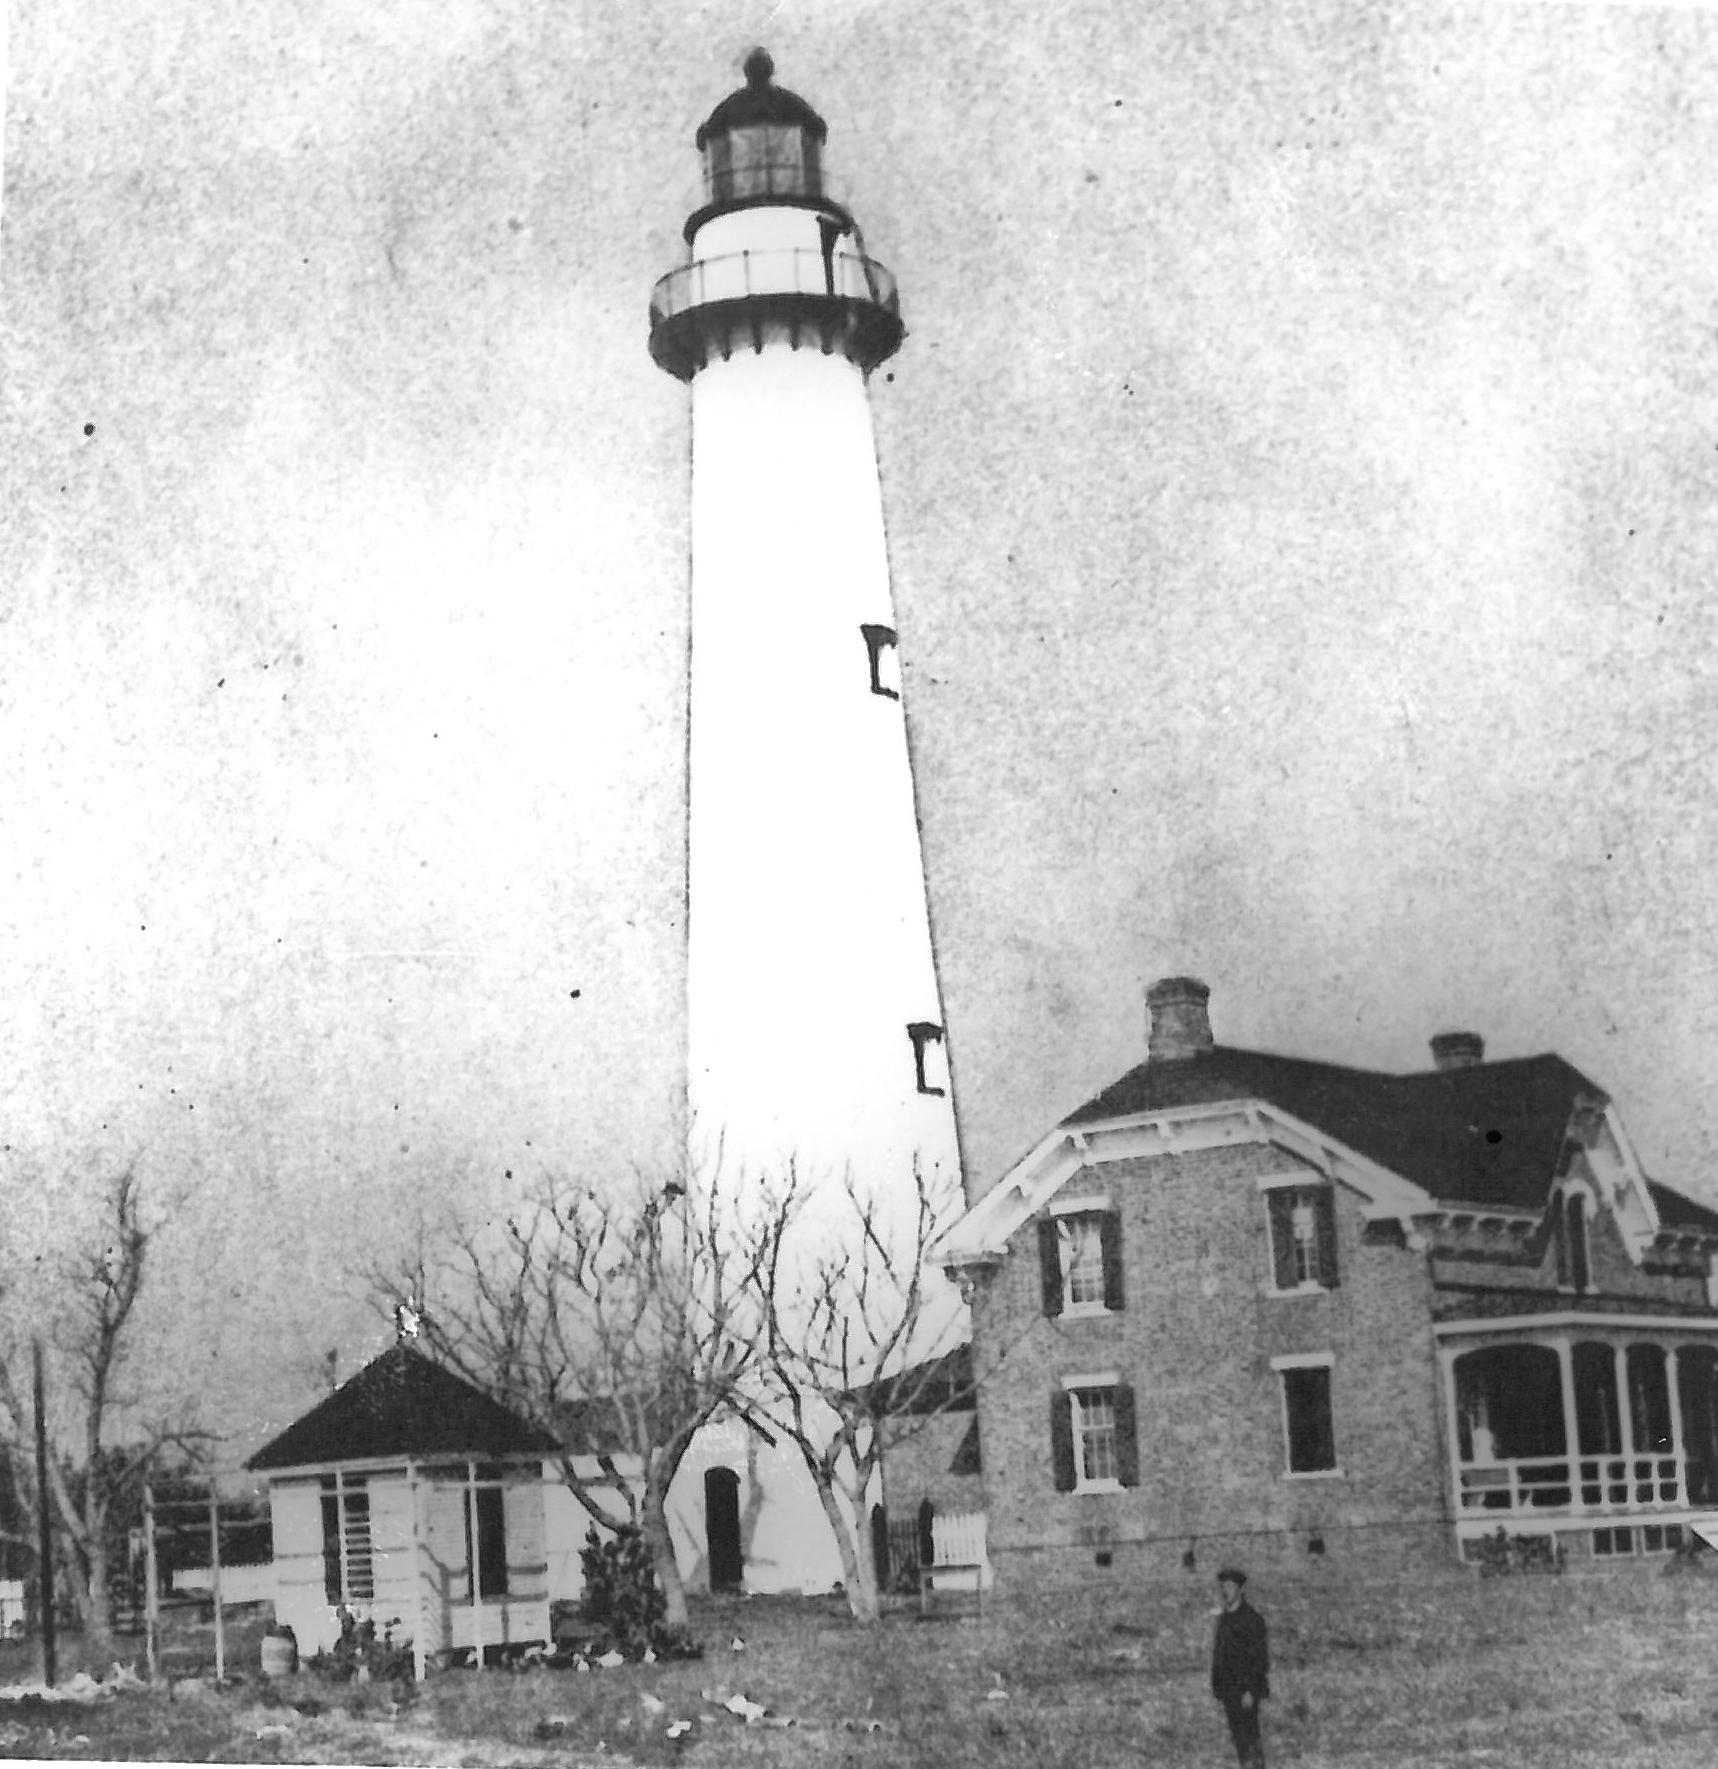 St. Simons Lighthouse Museum - Coastal Georgia Historical Society